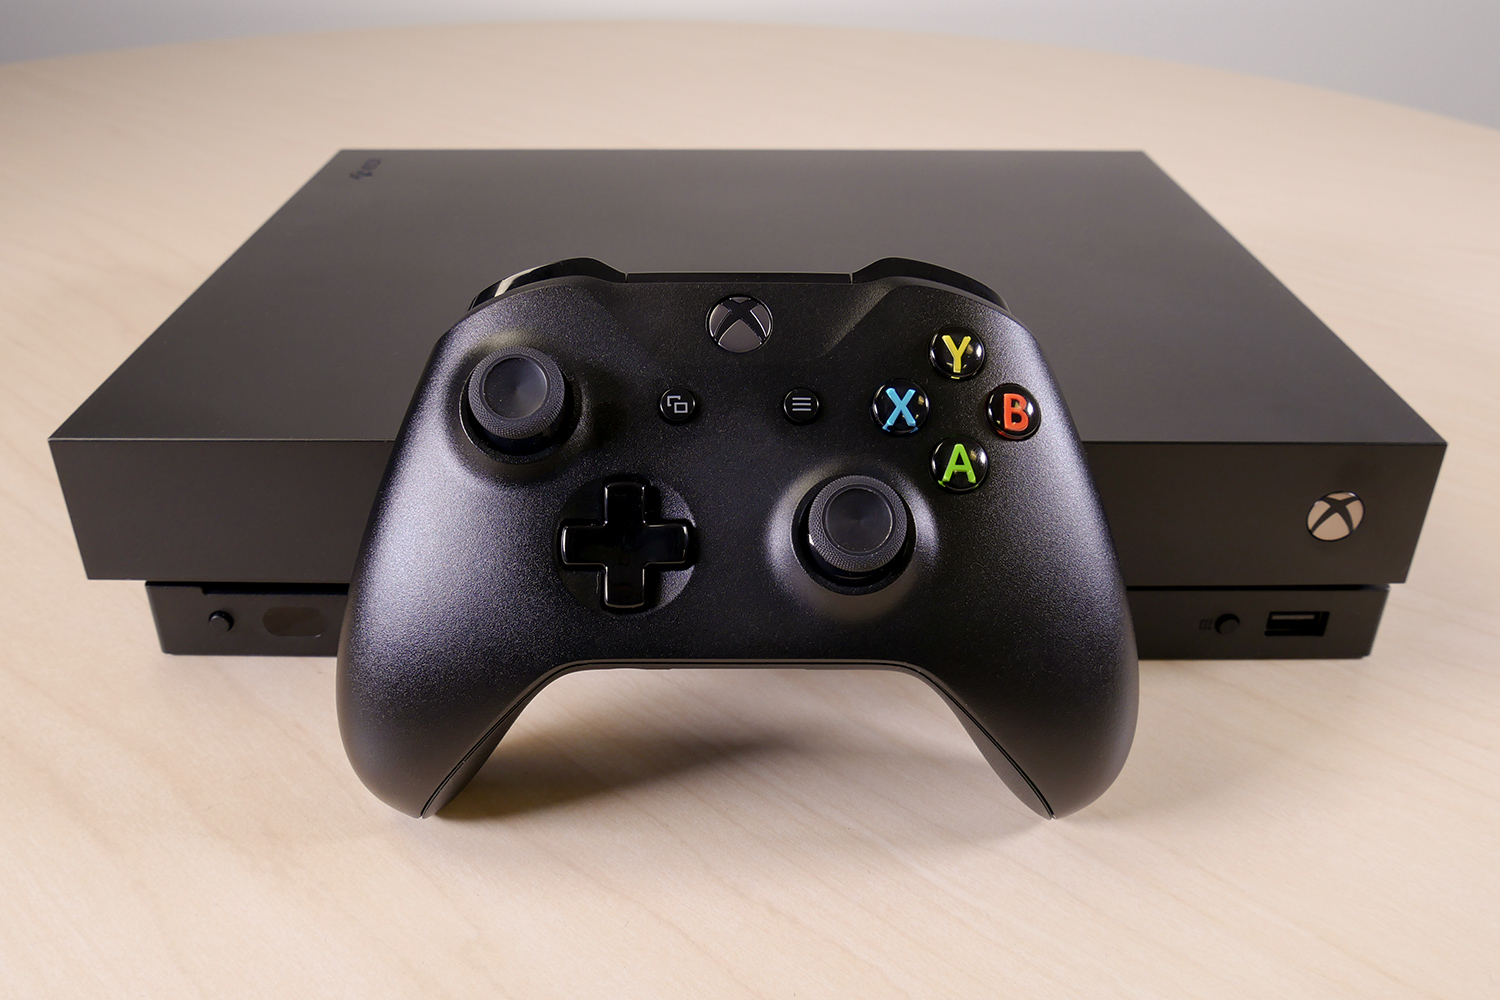 Dag Beweegt niet Zuidelijk Xbox One X Review 2020: The Most Powerful Console | Digital Trends